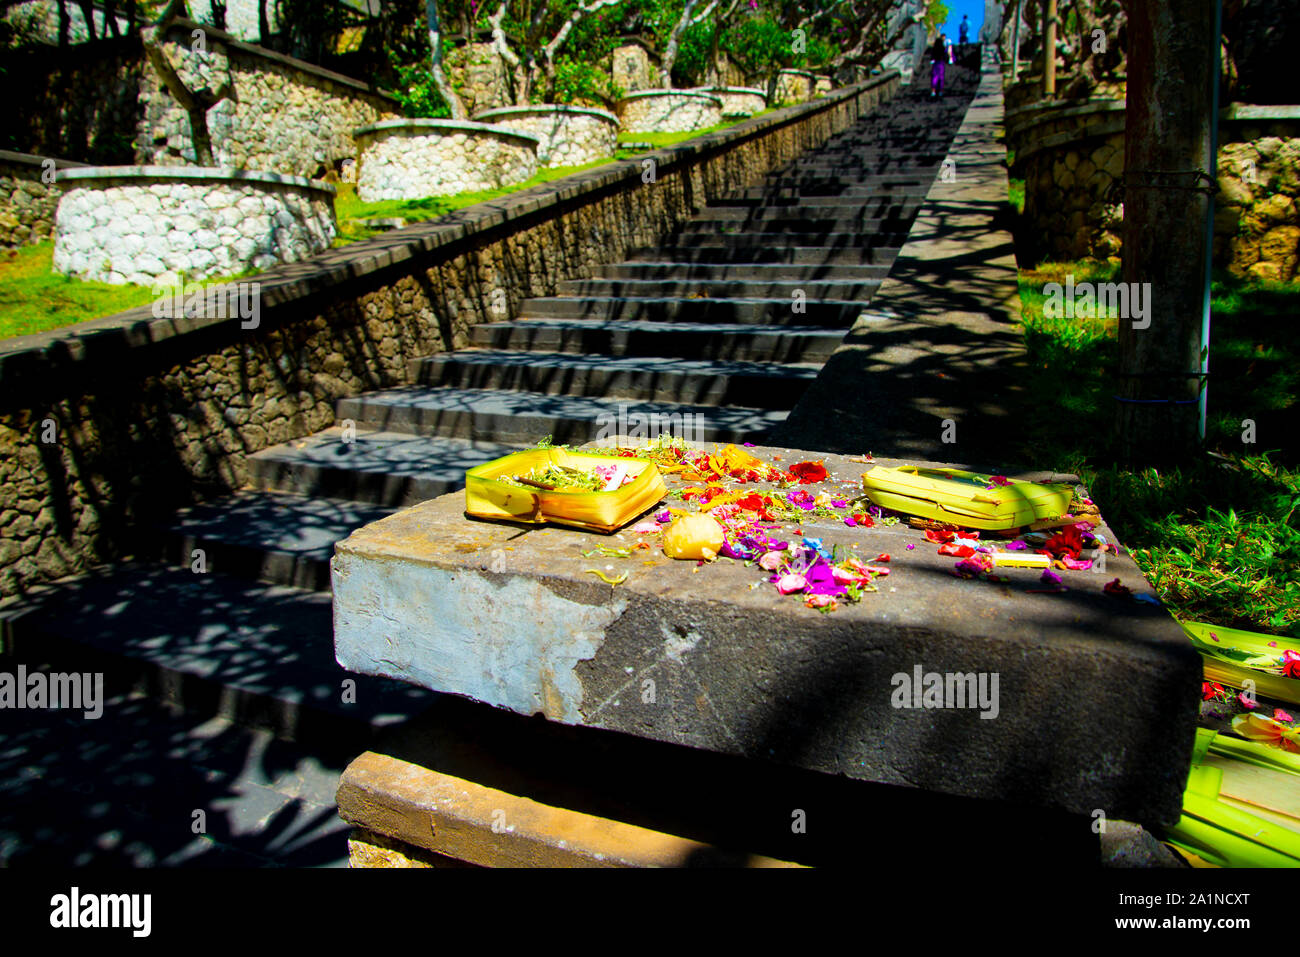 Canang Sari Offerings - Bali - Indonesia Stock Photo